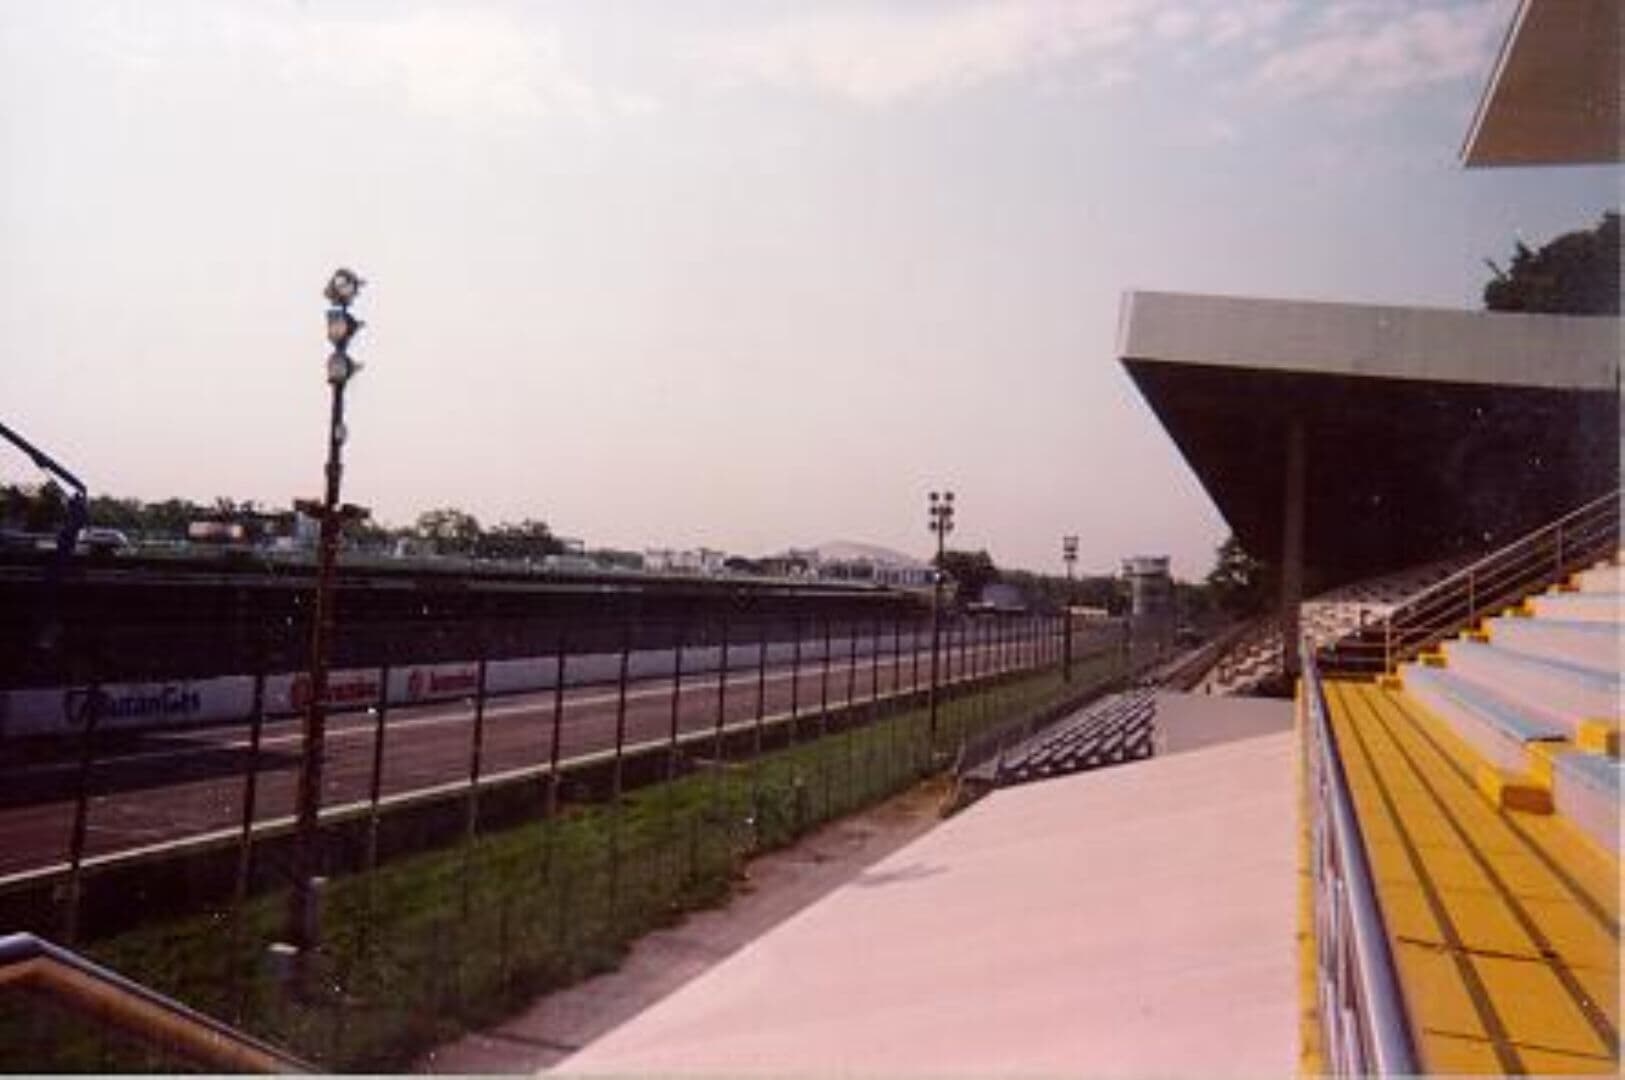 Monza photo